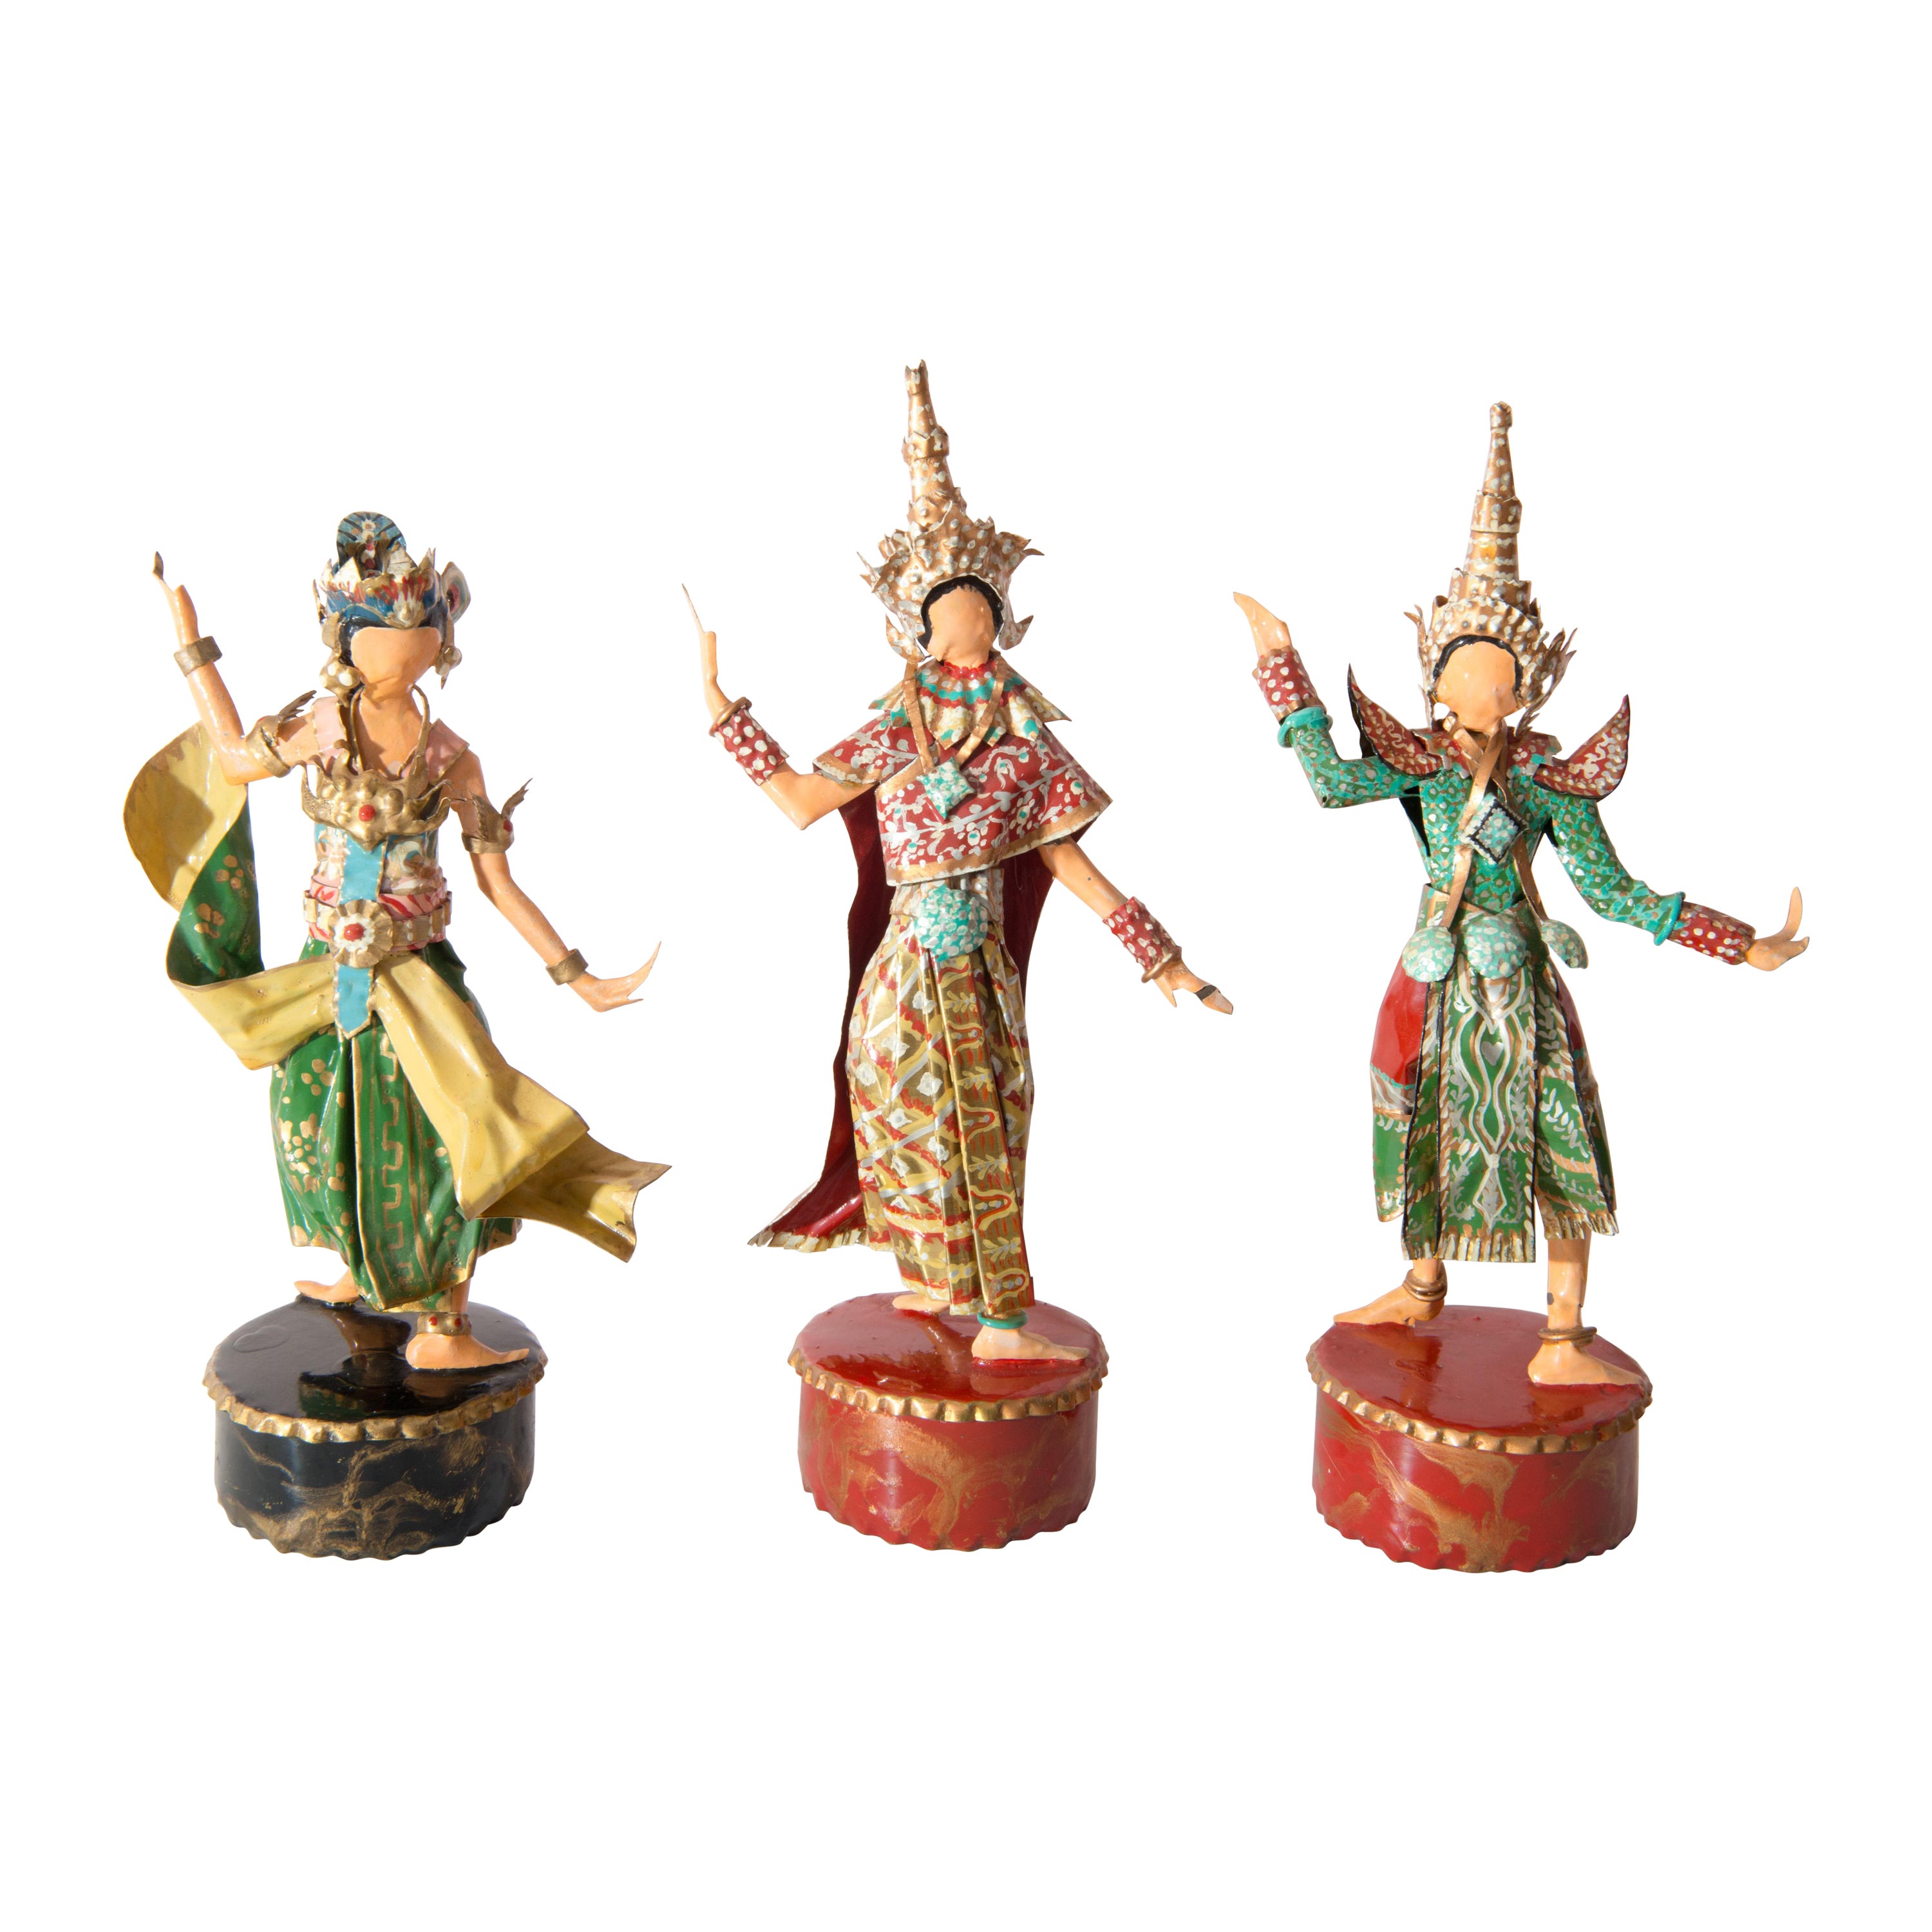 Trio of Thailand Dance Costumed Sculptures by Lee Menichetti